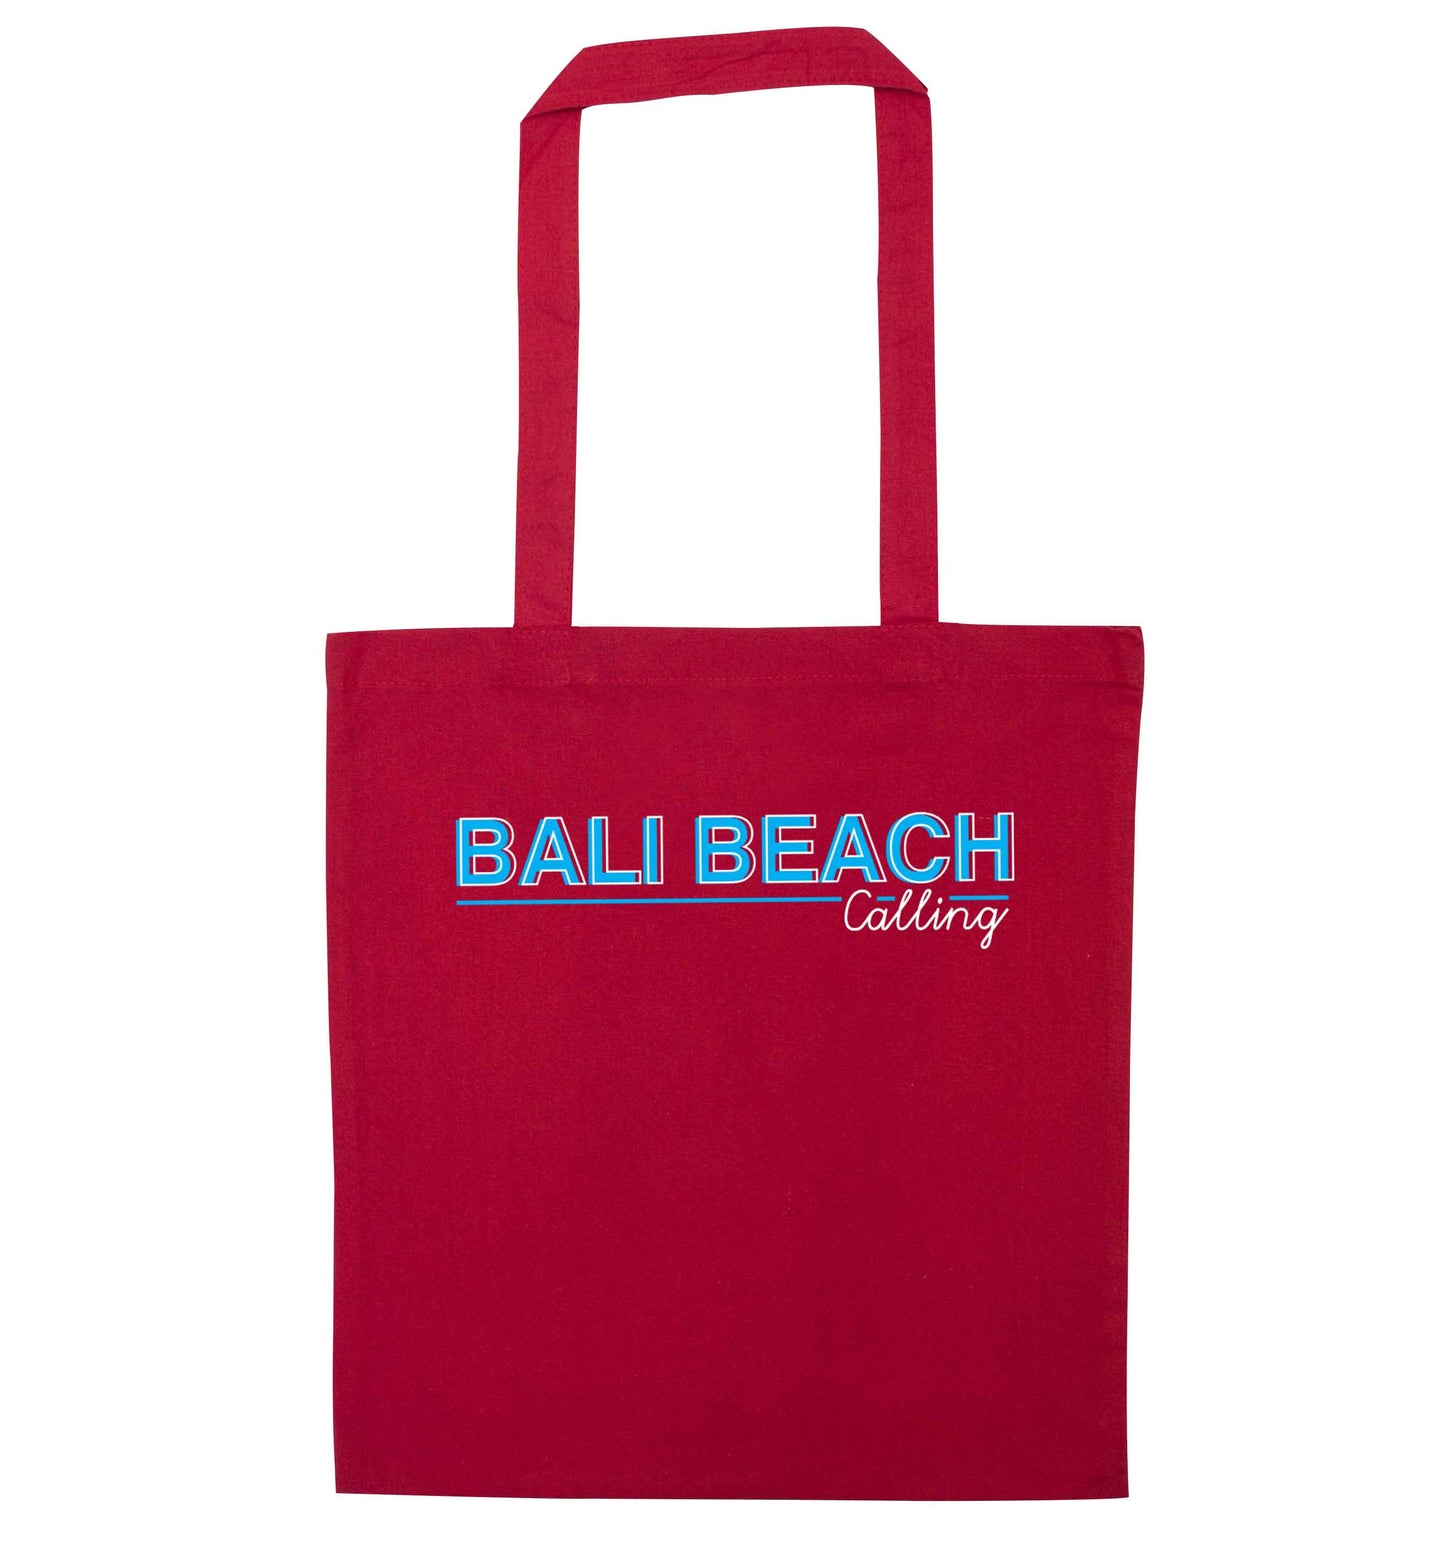 Bali beach calling red tote bag